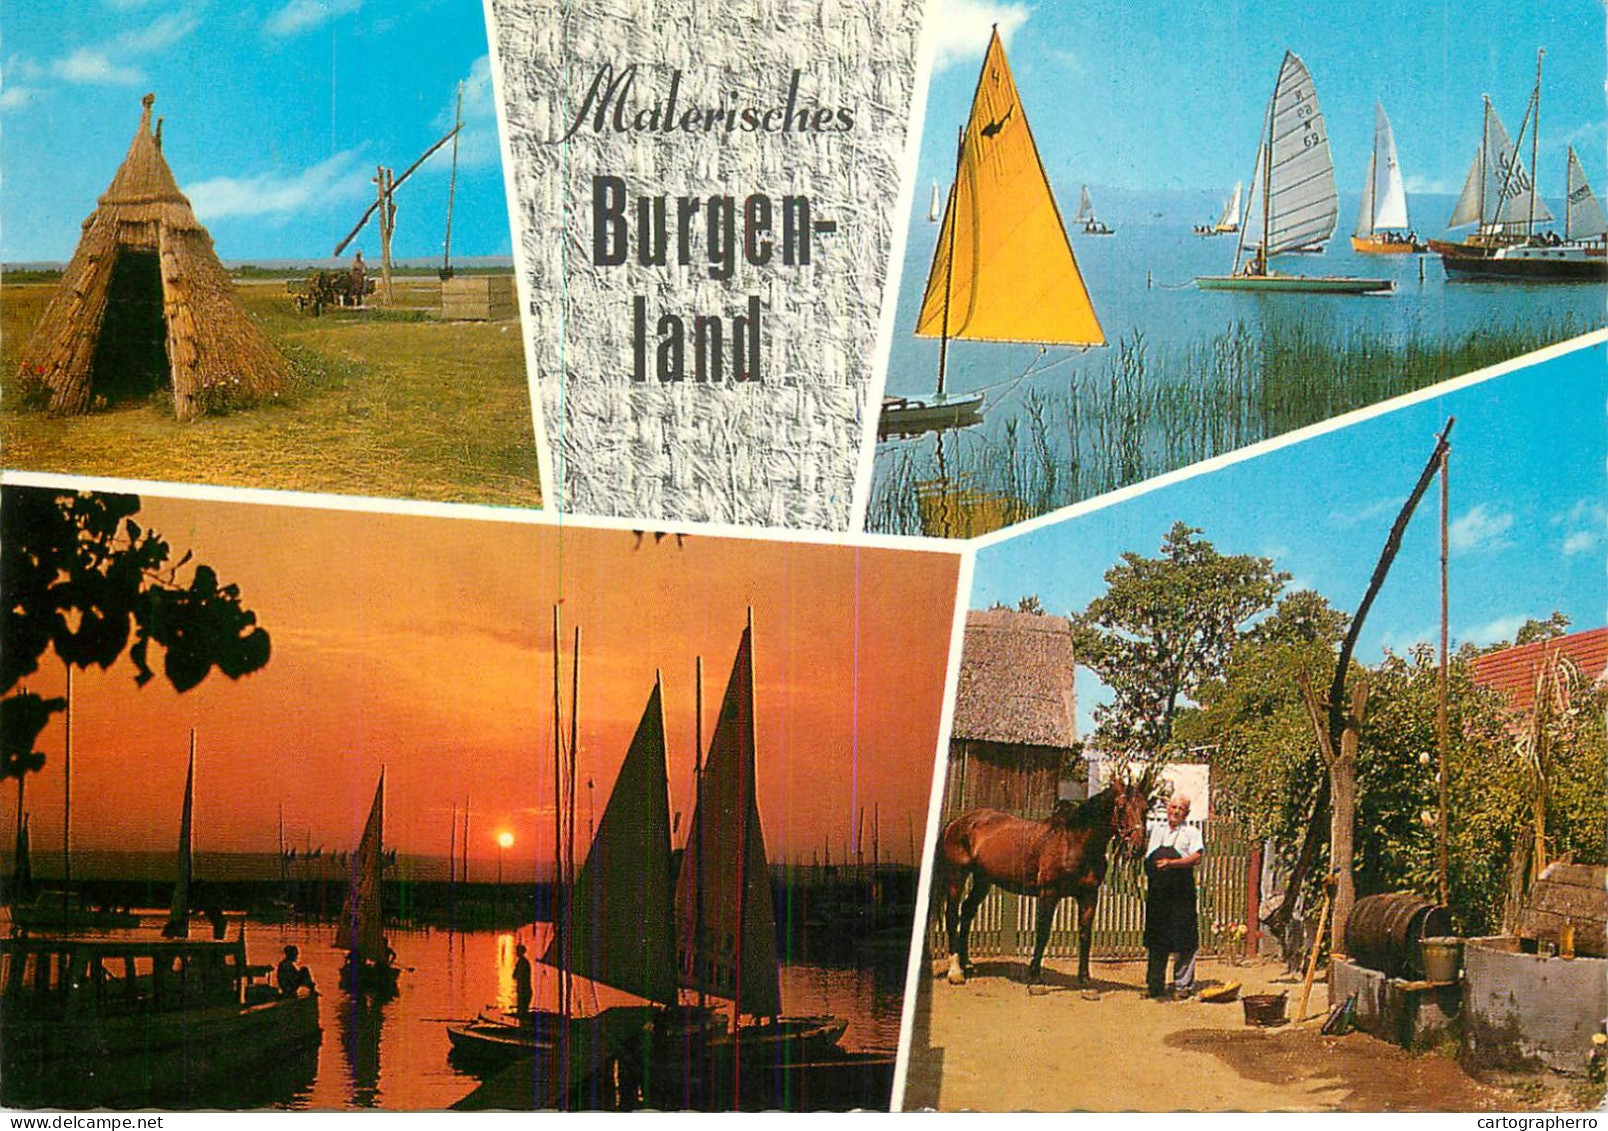 Navigation Sailing Vessels & Boats Themed Postcard Burgenland Windsurf - Sailing Vessels